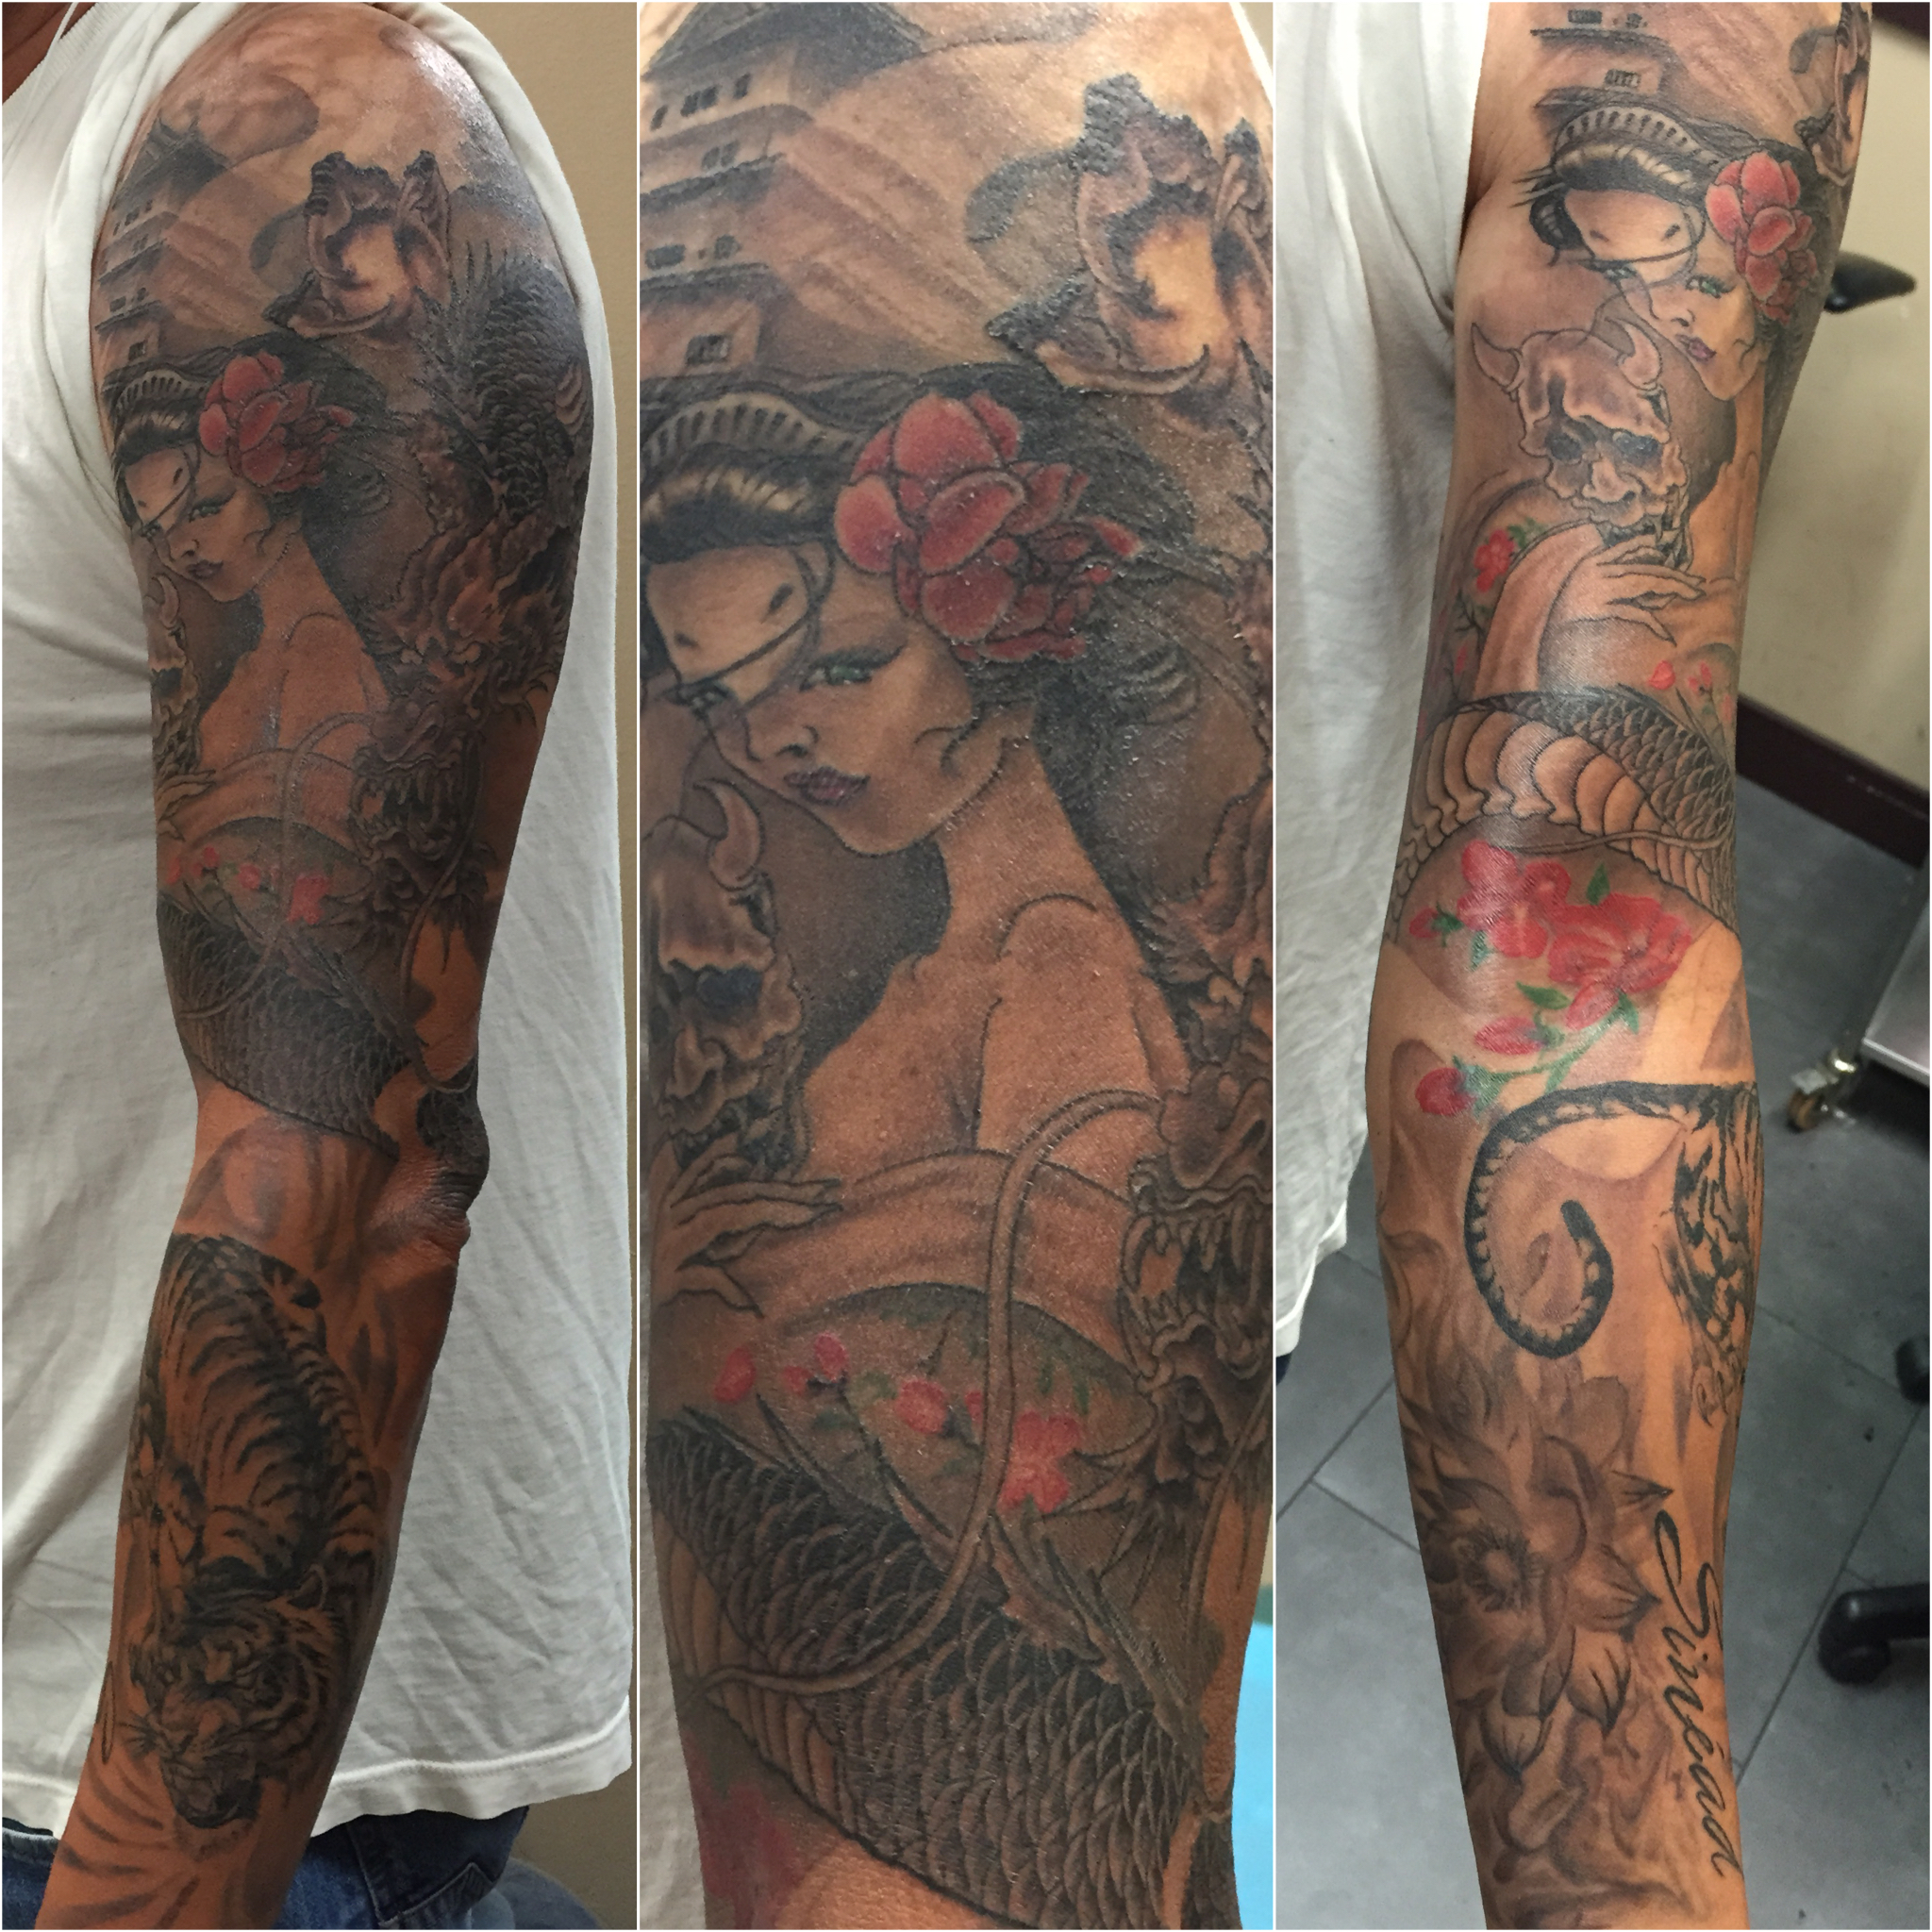 Vu Tran tattoo artist